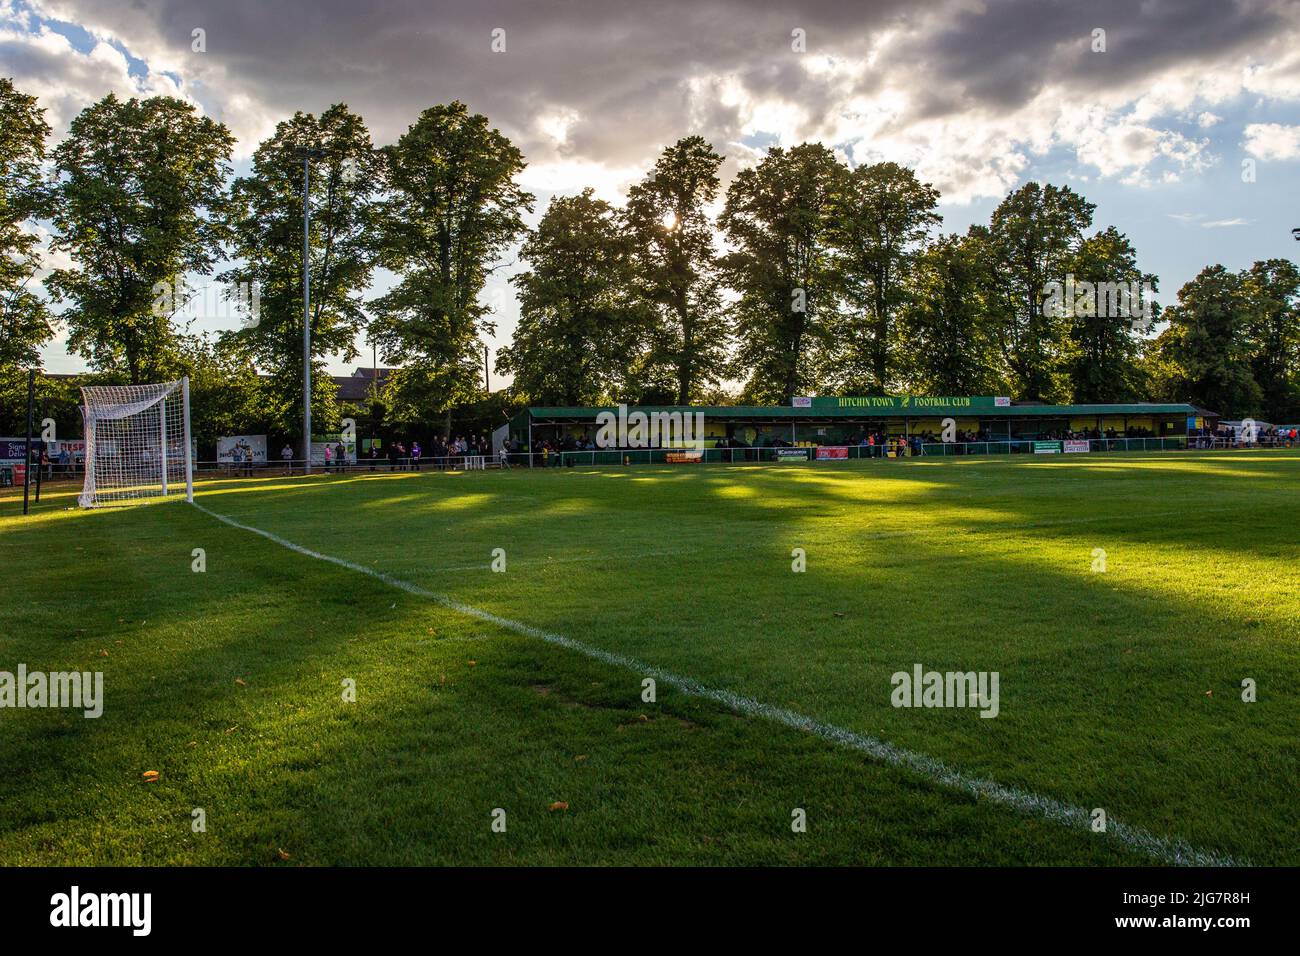 Terrain de football de la ville d'Hitchin Banque D'Images